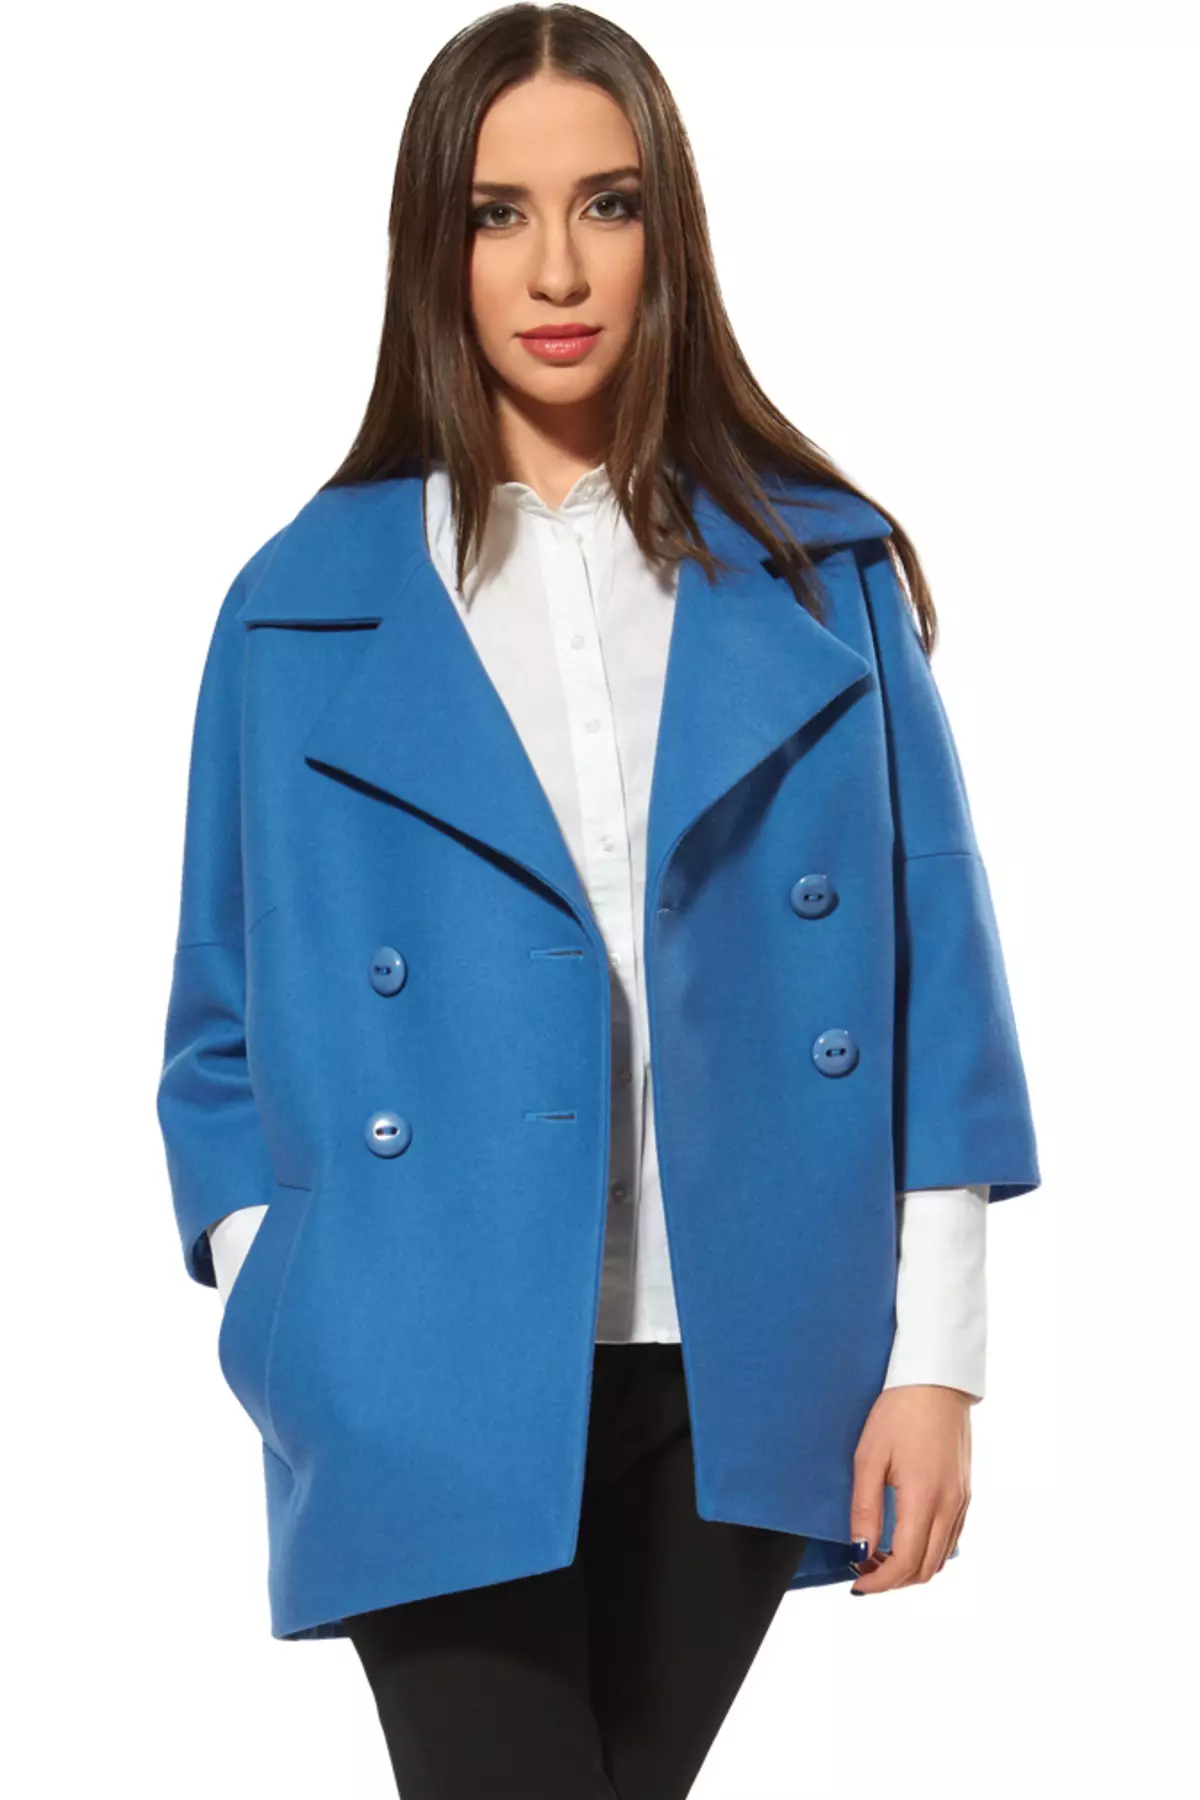 Coat-jacket (36 photos): Fashionable Valya Models of the Spring Season 2021, Women's Coat in the form of jacket 478_26